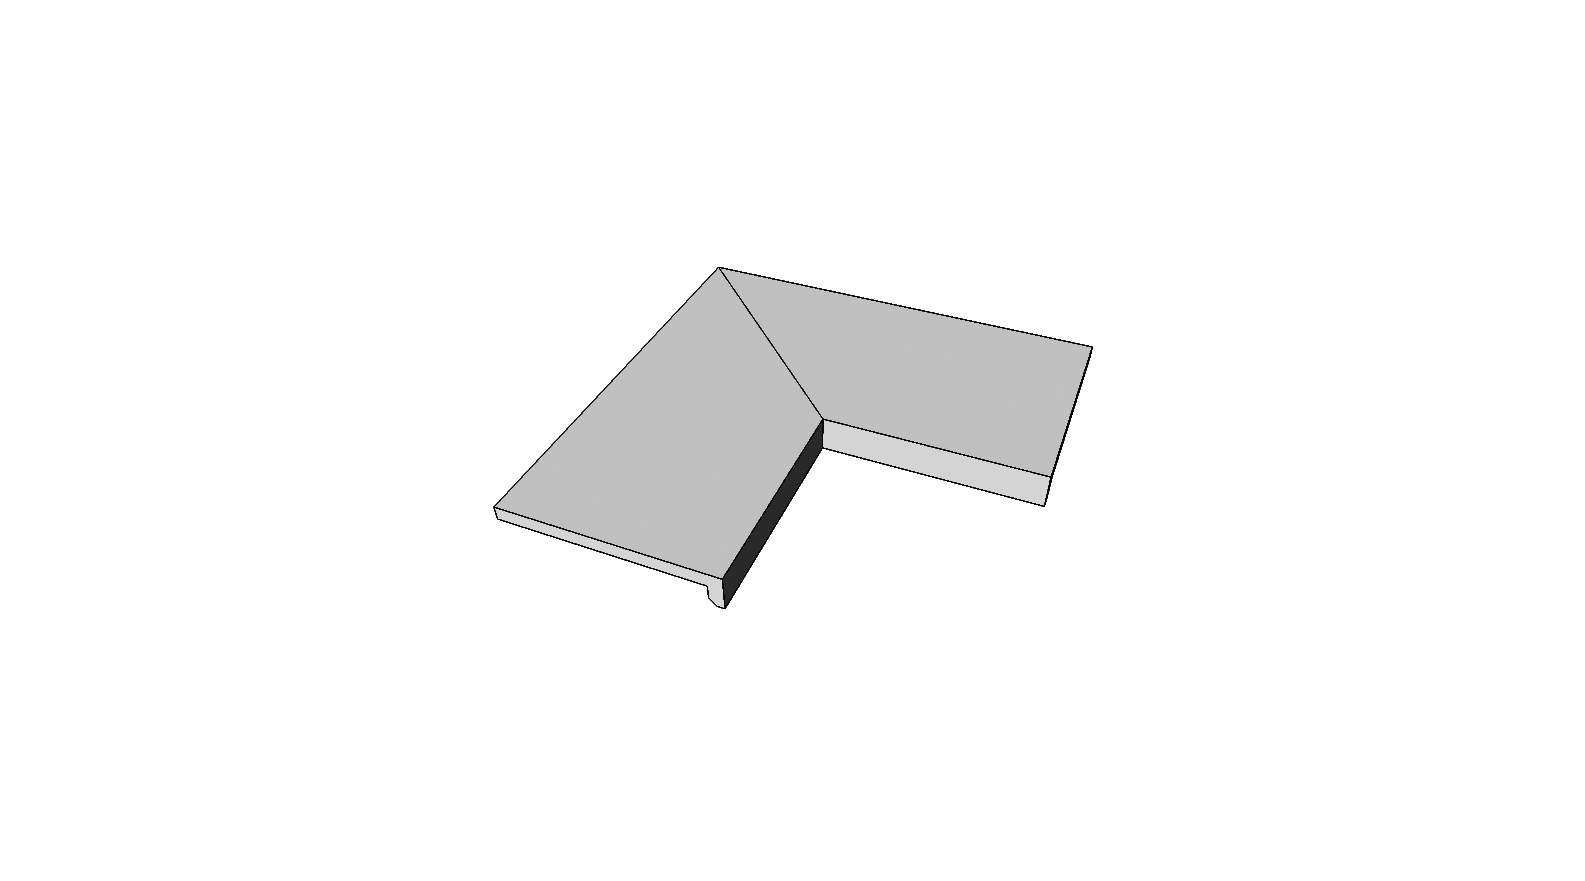 L-board stuck full internal angle (2 pcs) <span style="white-space:nowrap;">12"x2"</span>   <span style="white-space:nowrap;">thk. 20mm</span>